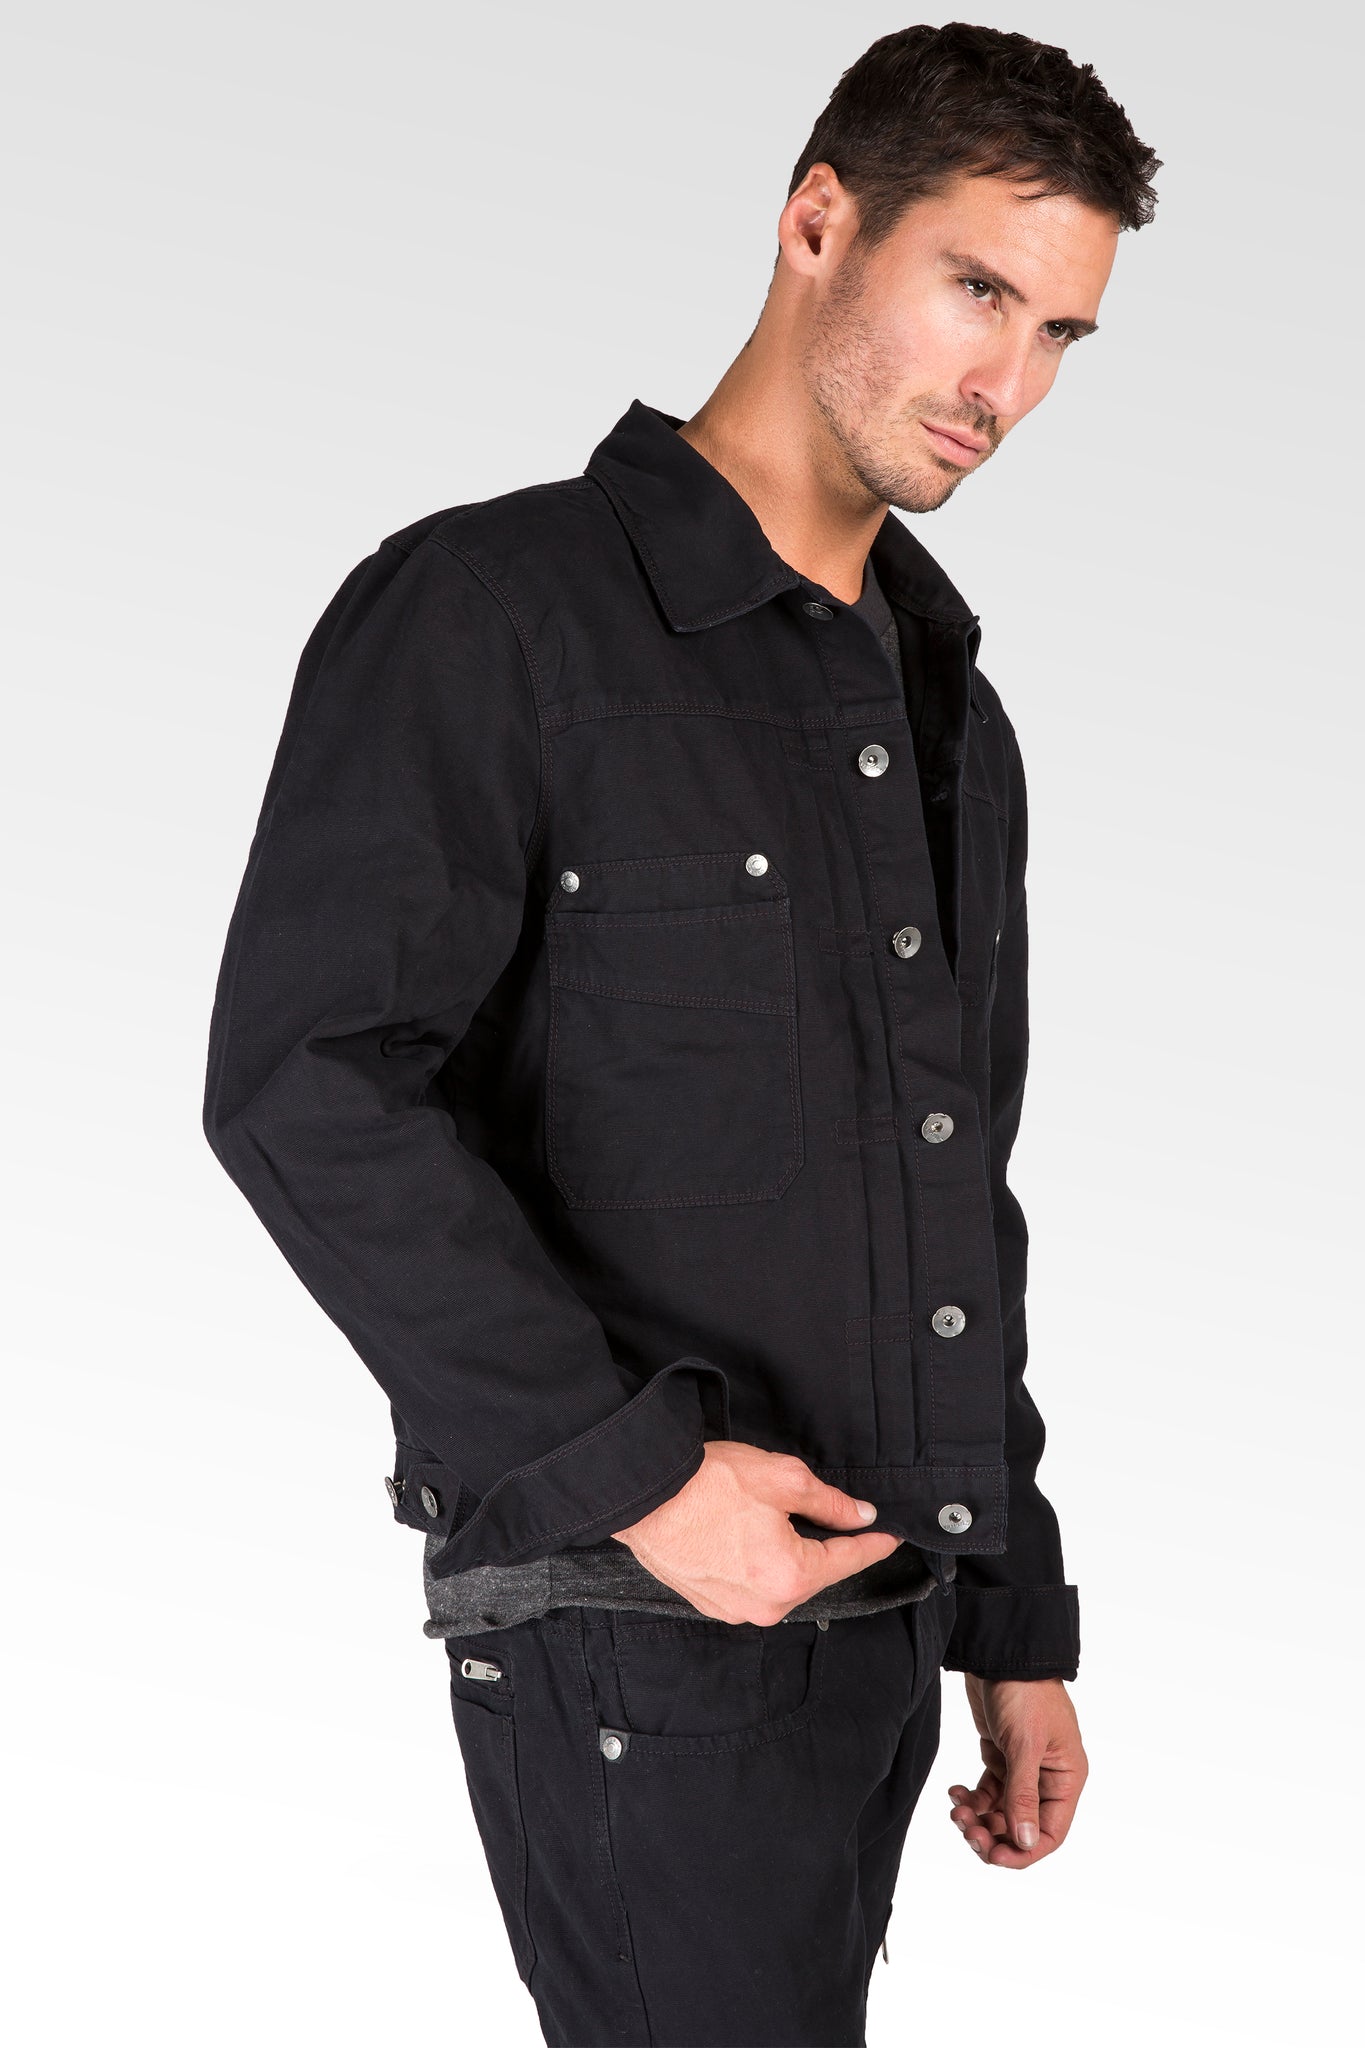 Black Heavy Canvas Trucker Jacket 100% Cotton Rugged & Stylish